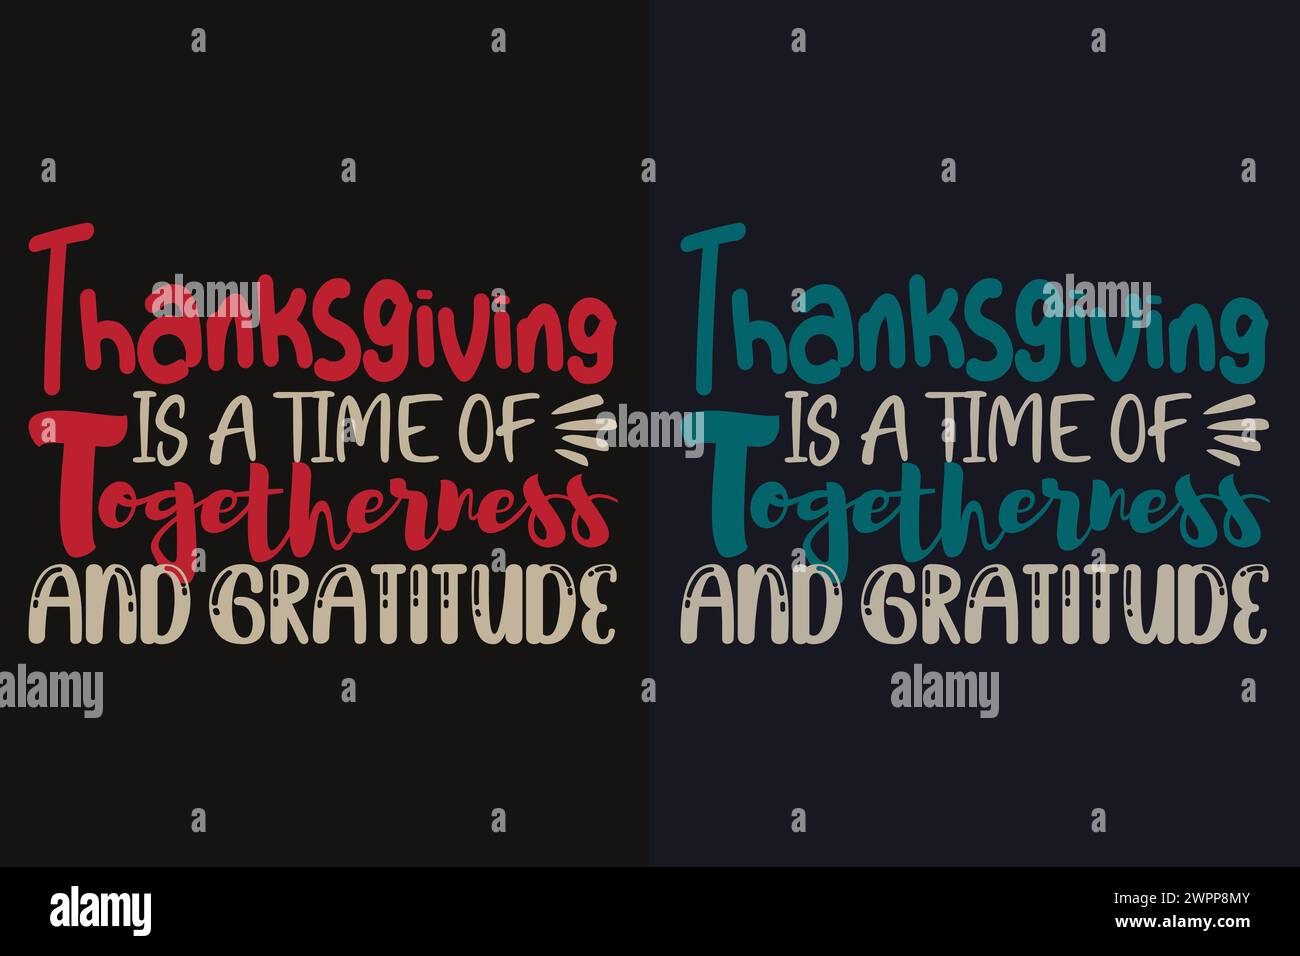 Dankbares, Dankbares Hemd, Herbsthemd, Herbststimmung, Hallo Kürbis, Thanksgiving-T-Shirt, niedliches Danksagungs-T-Shirt, Herbst-T-Shirt, Grateful-Shirt, Herz-T-Shirt Stock Vektor